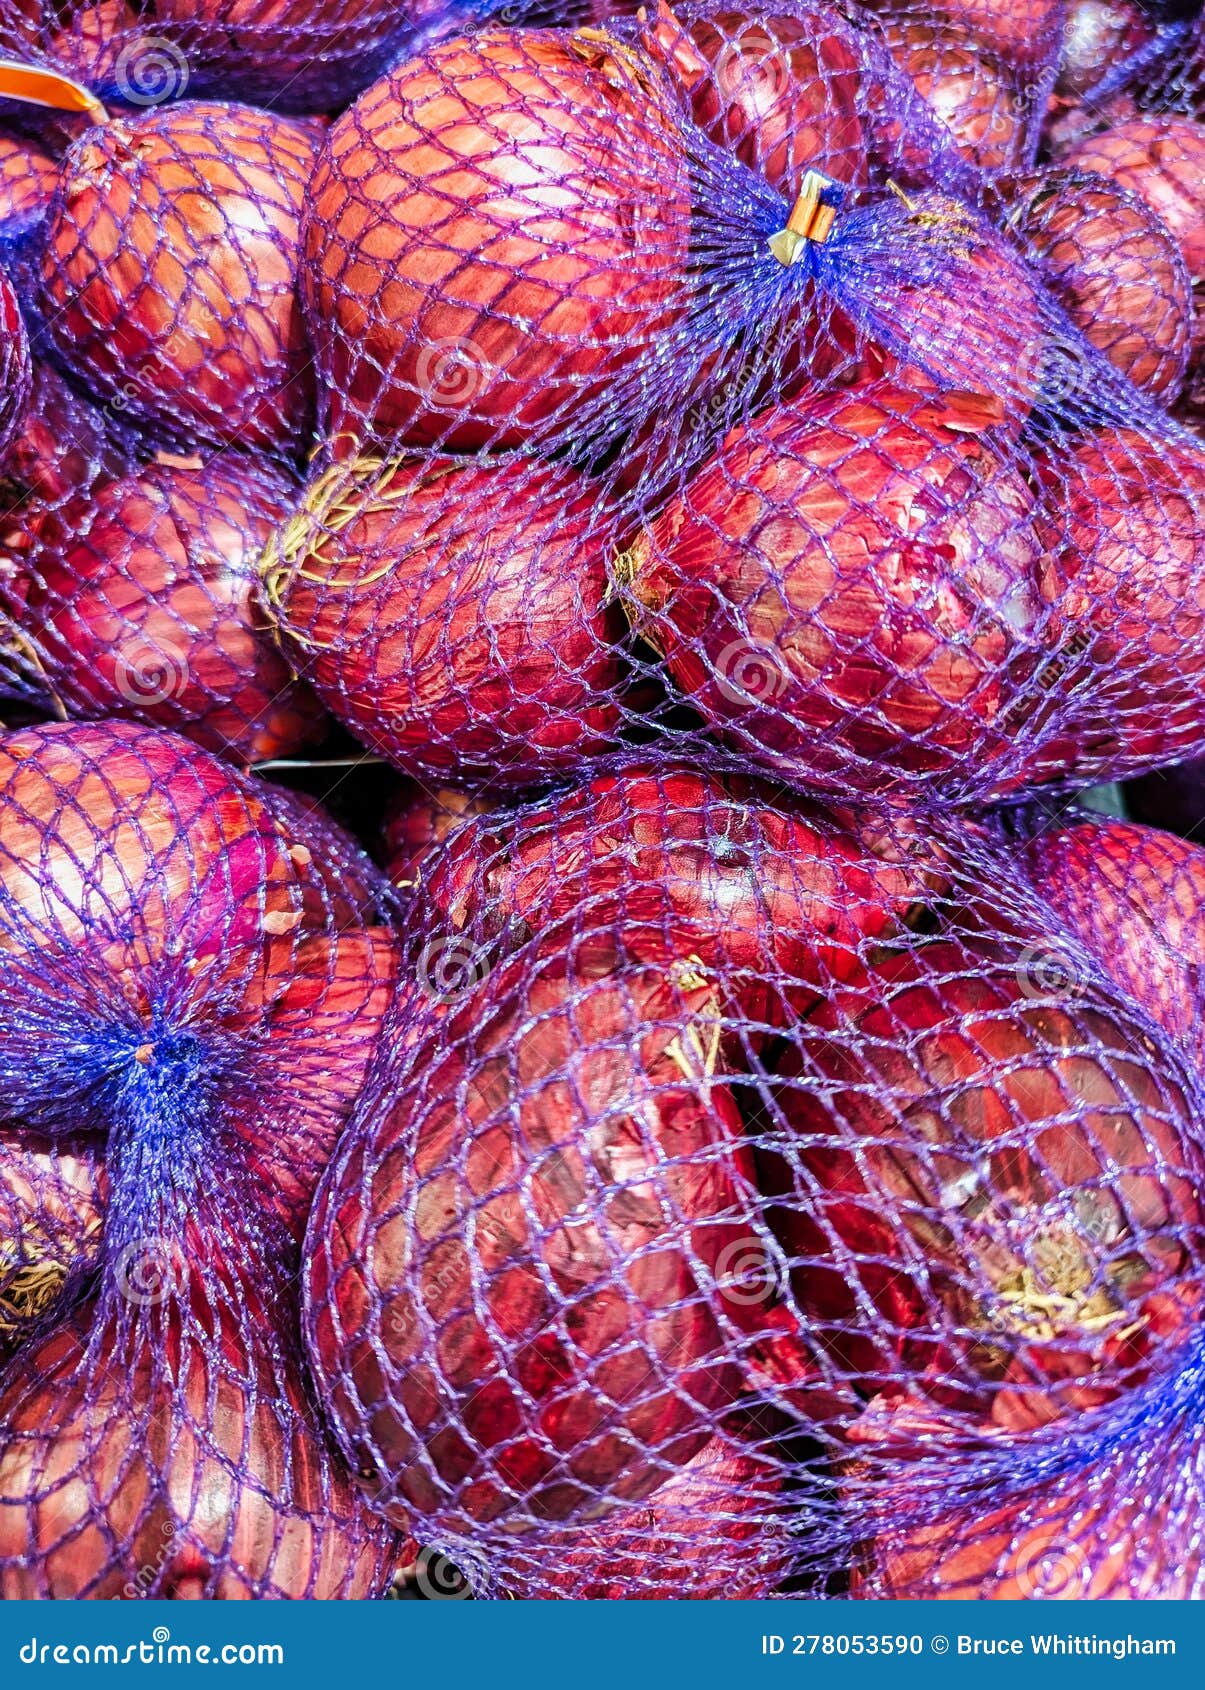 https://thumbs.dreamstime.com/z/many-red-onions-purple-mesh-bags-detail-netting-sale-fresh-fruit-vegetable-shop-278053590.jpg